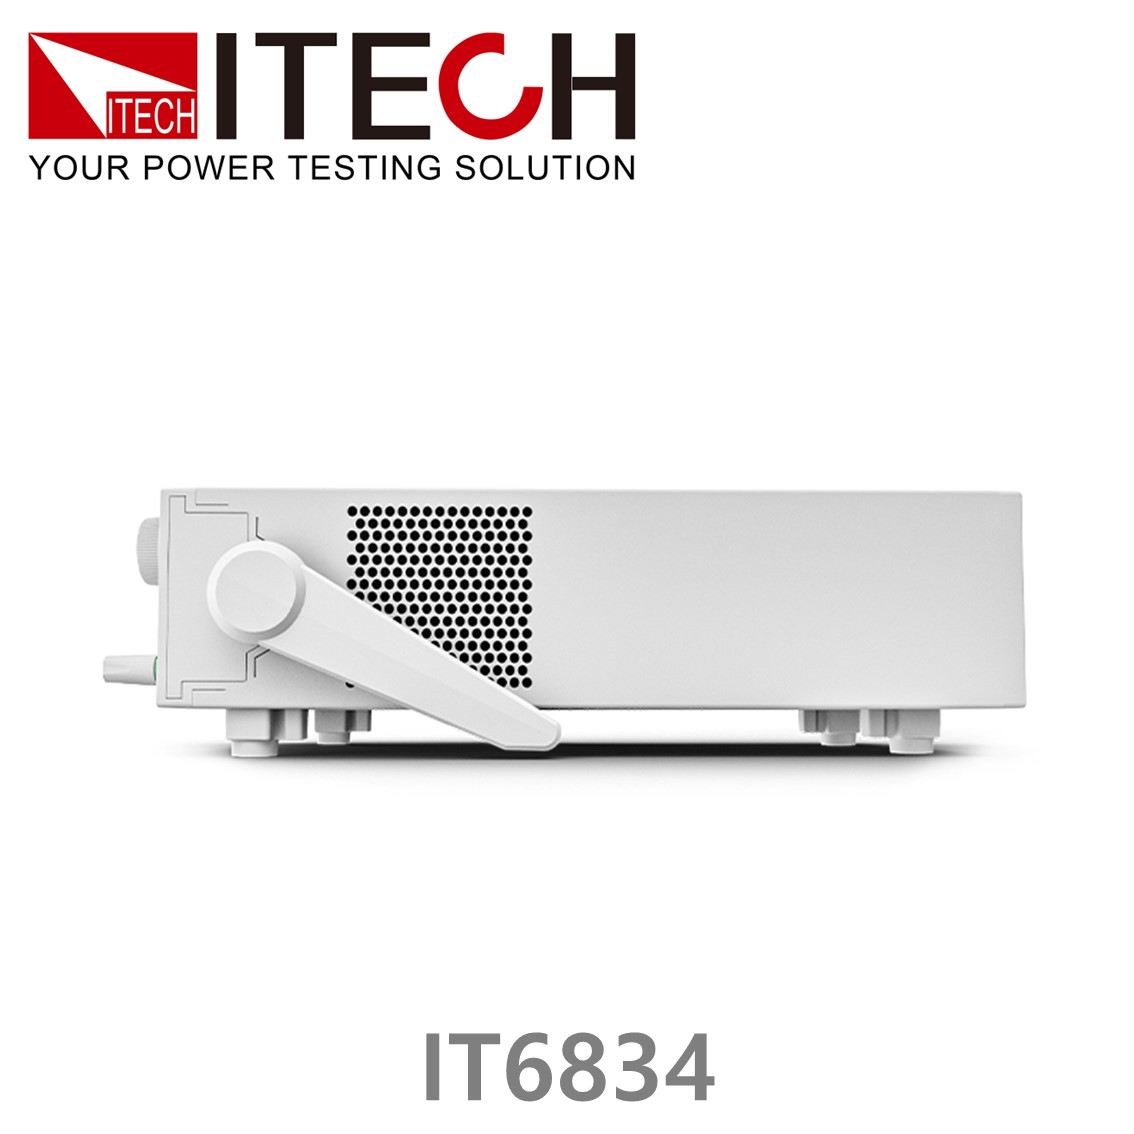 [ ITECH ] IT6834  0-150V/0-1.2A/180W  리니어 DC전원공급기